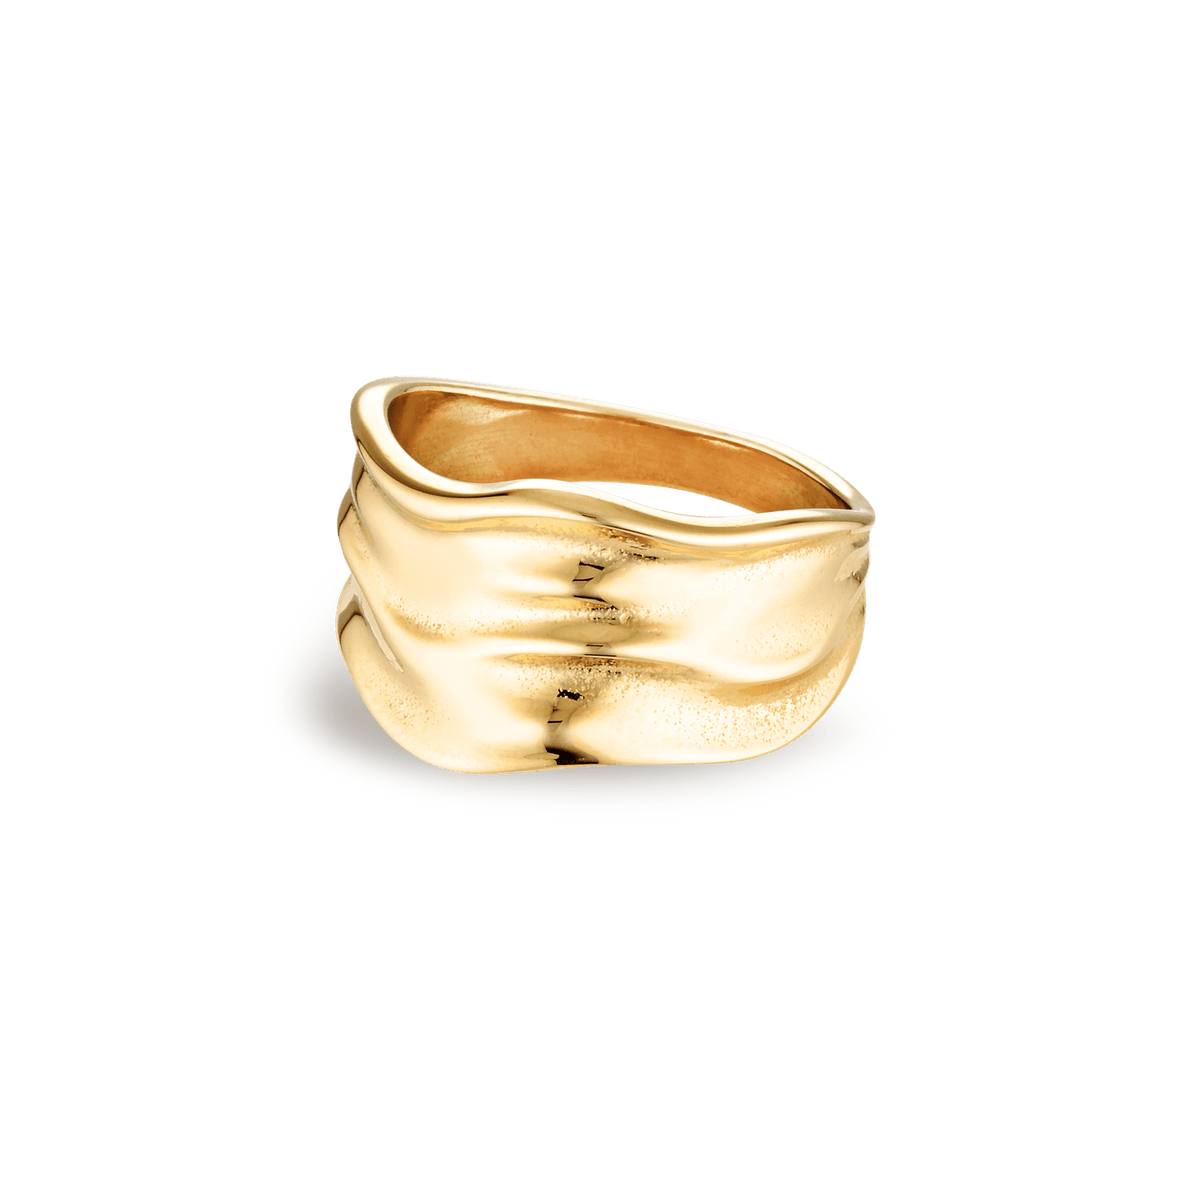 Sandy Gold Ring